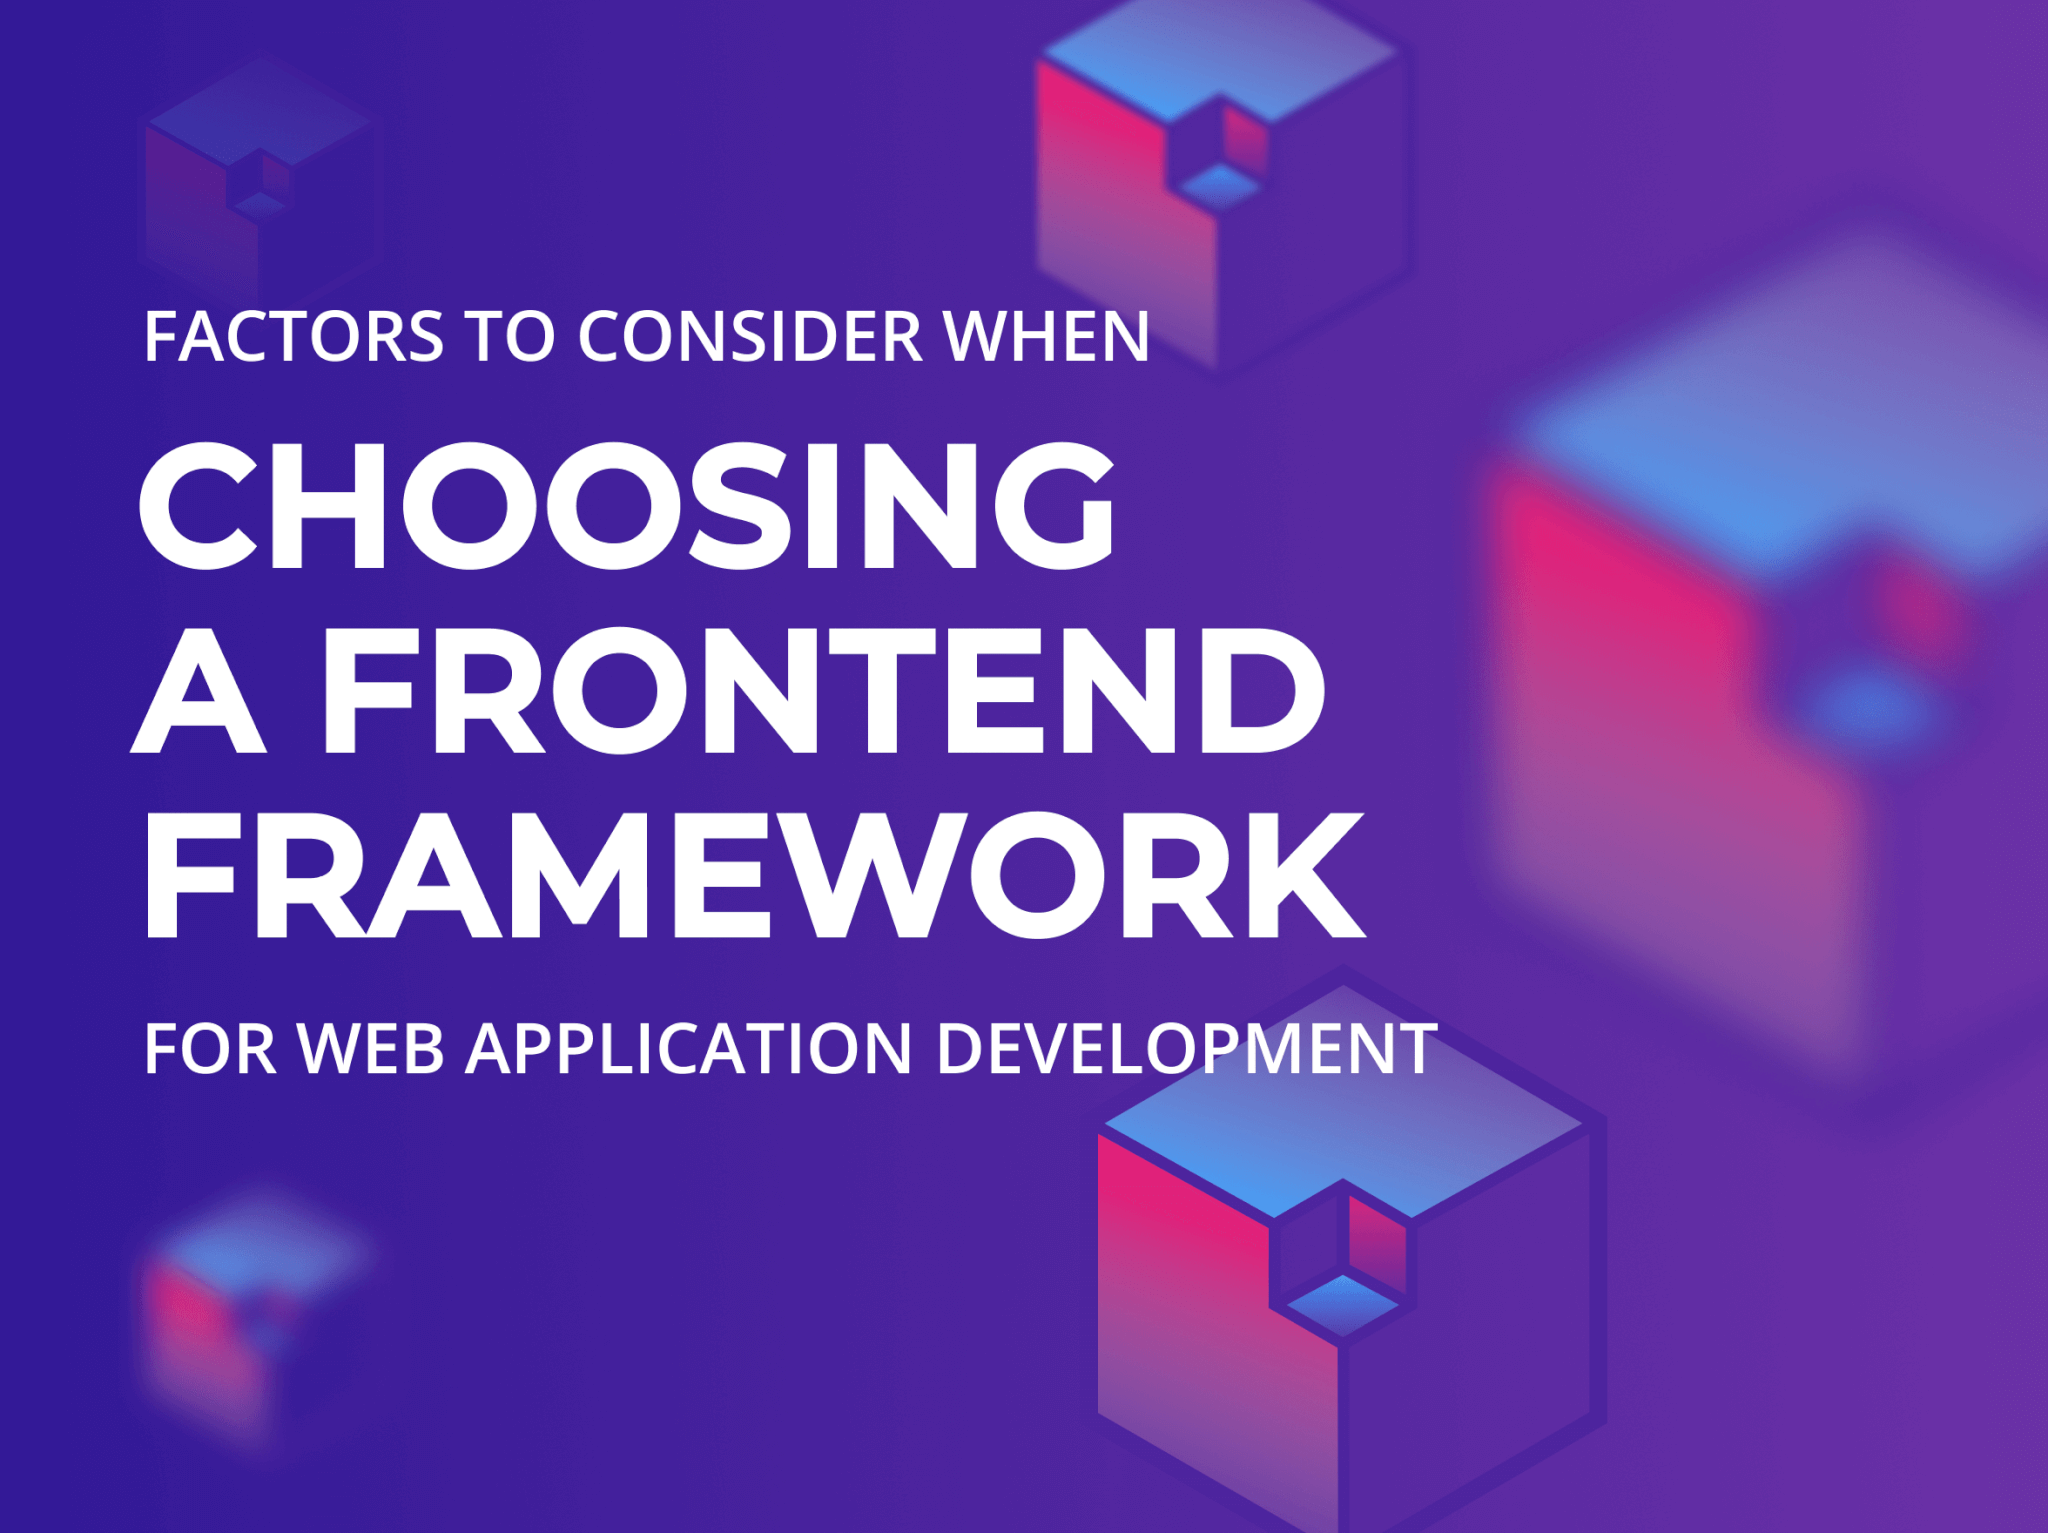 Factors to consider when choosing a frontend framework for web application development